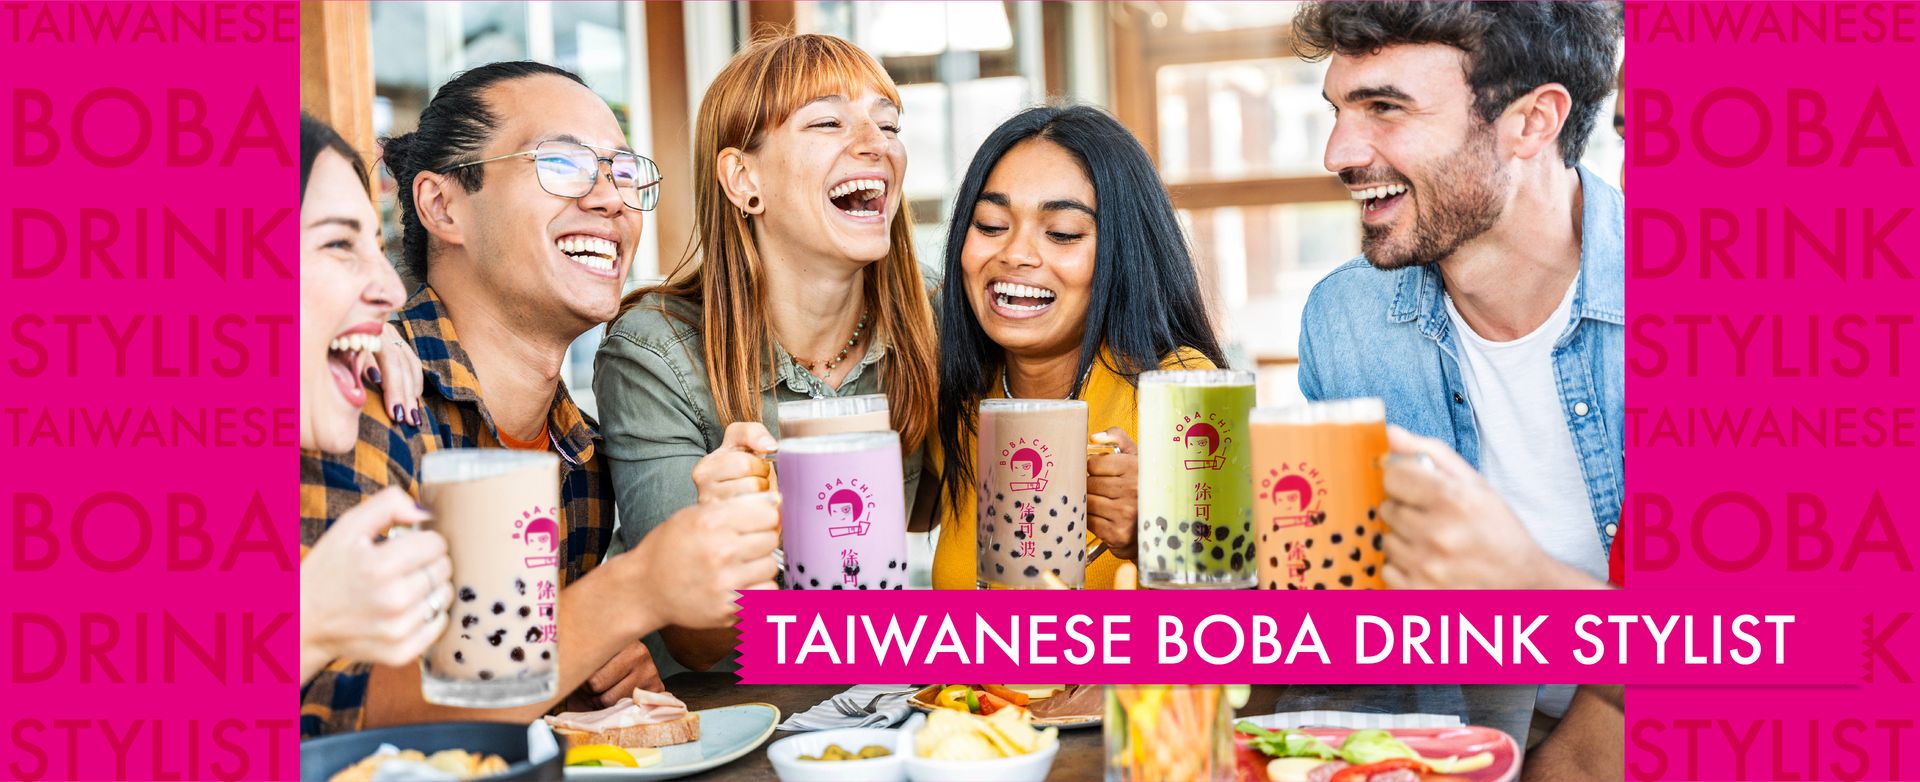 Taiwan boba drink stylist